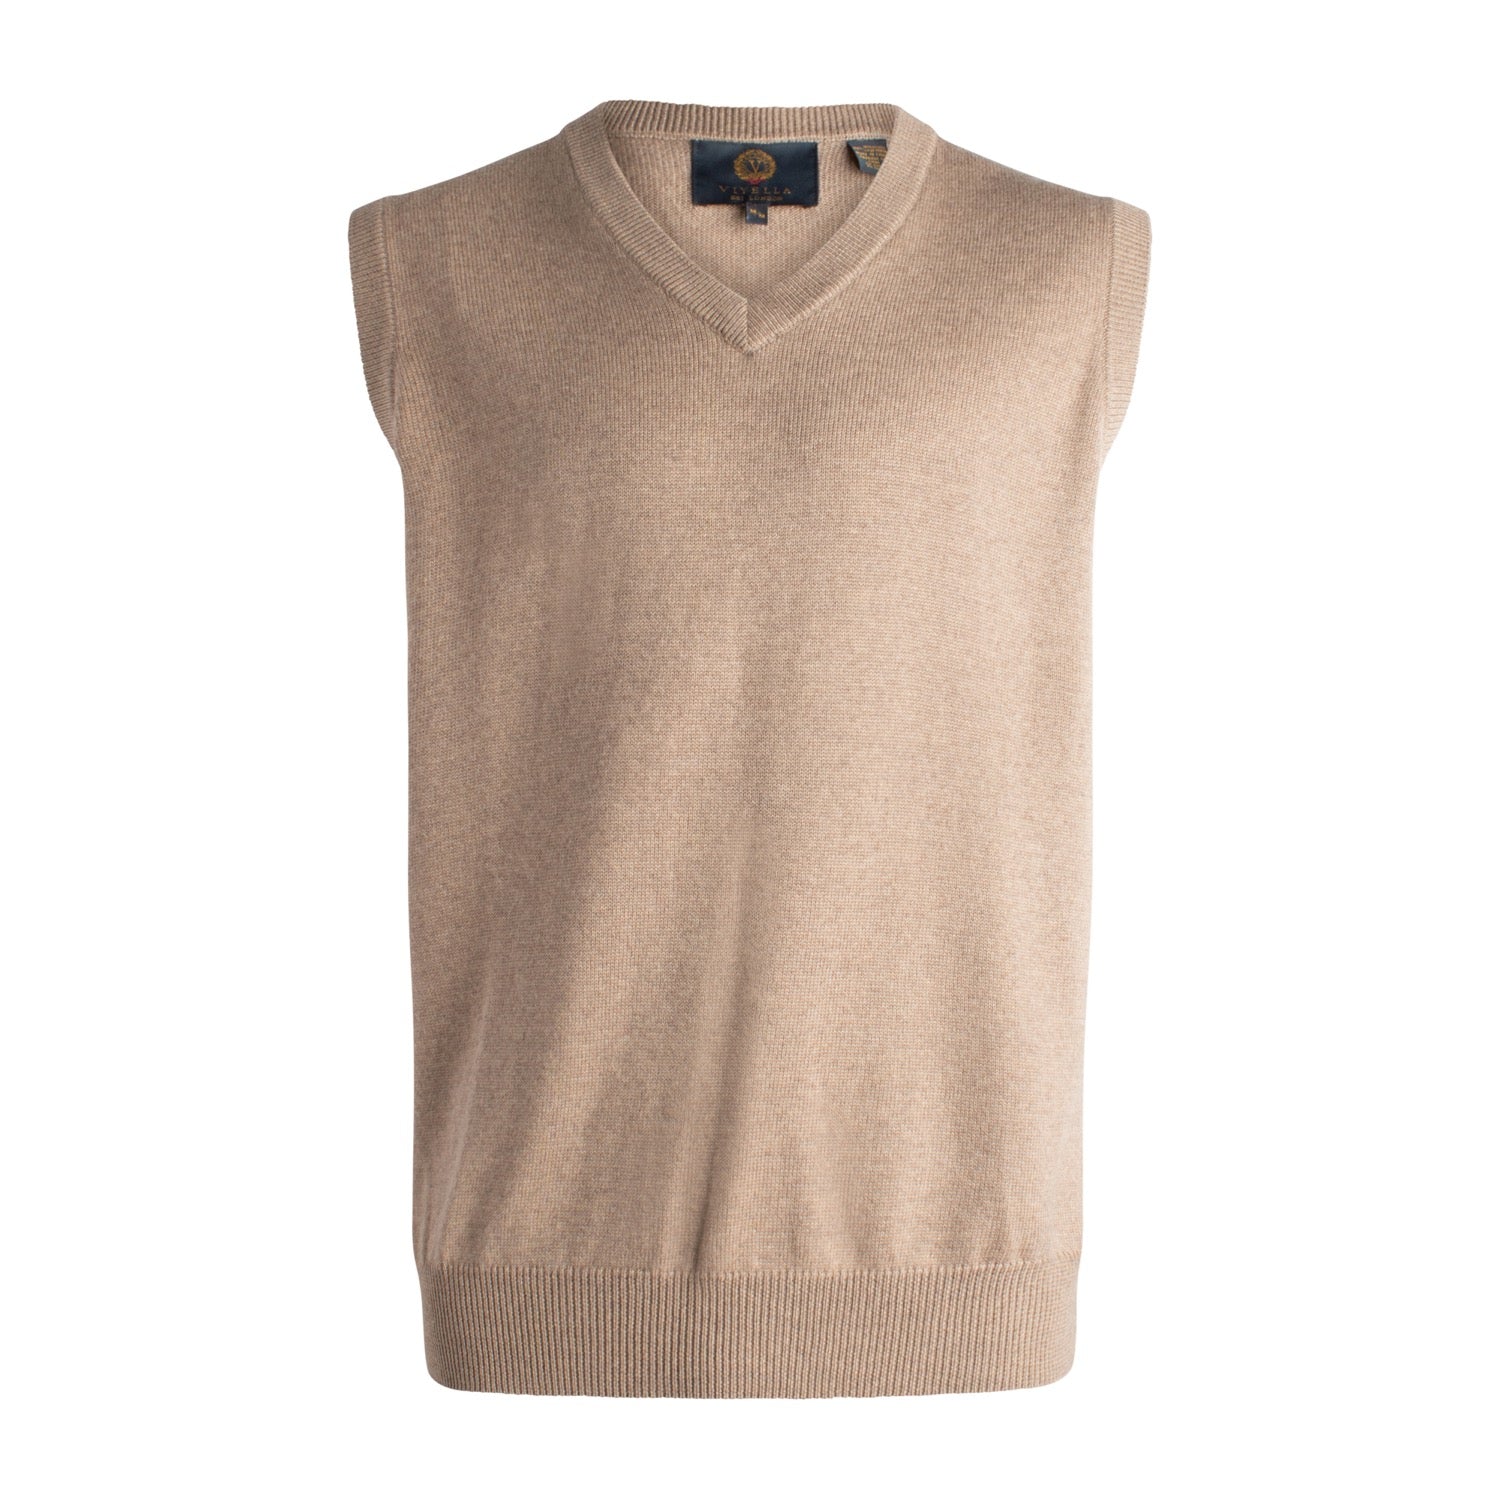 Extra Fine 'Zegna Baruffa' Merino Wool V-Neck Sleeveless Sweater Vest in Mushroom by Viyella